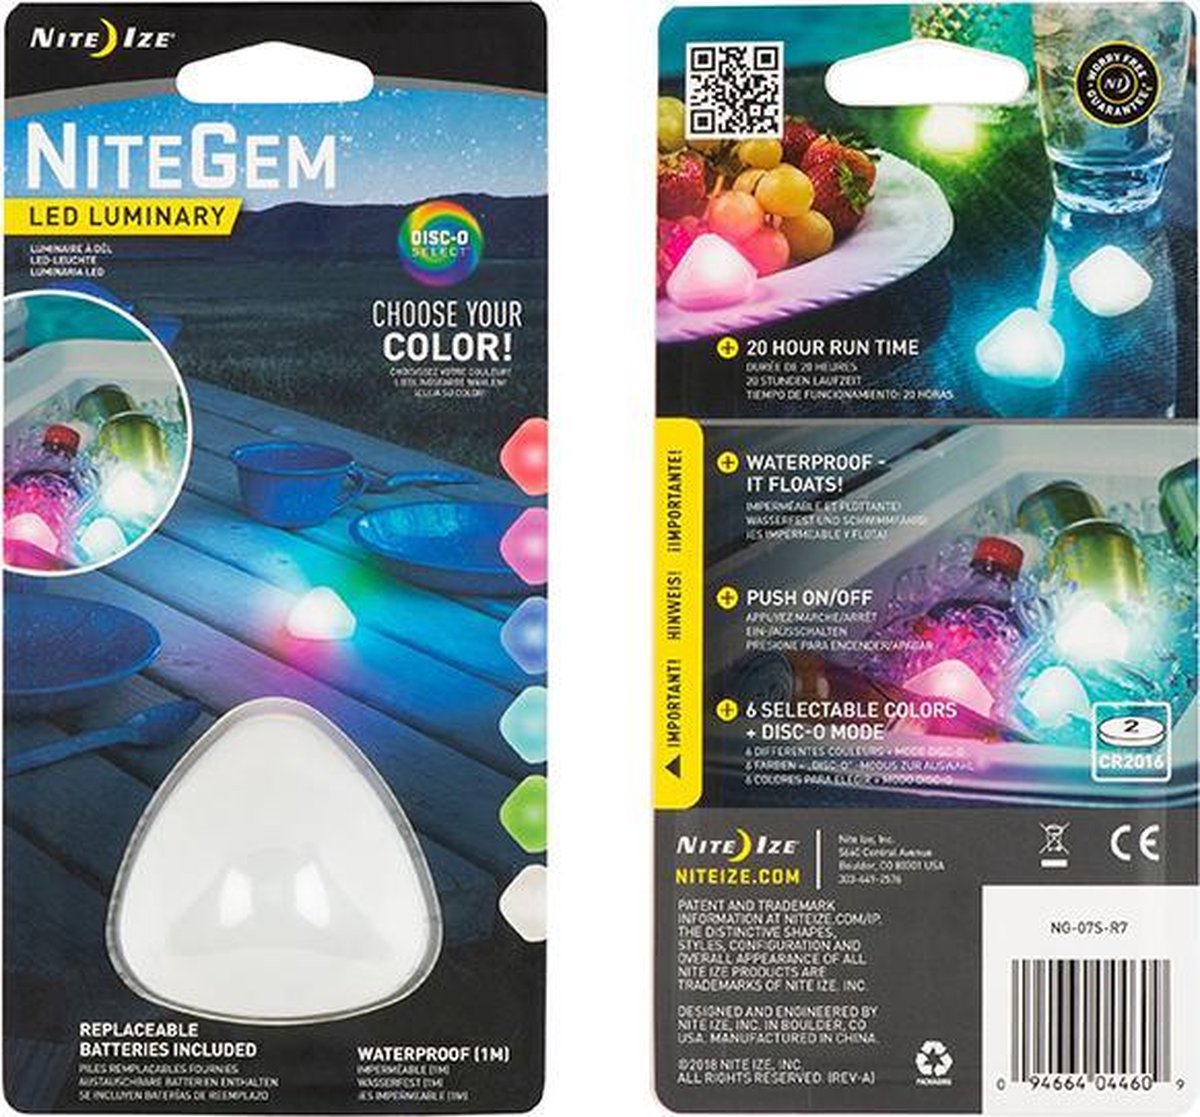 NITE IZE NiteGem LED Luminary - Disc-O Select